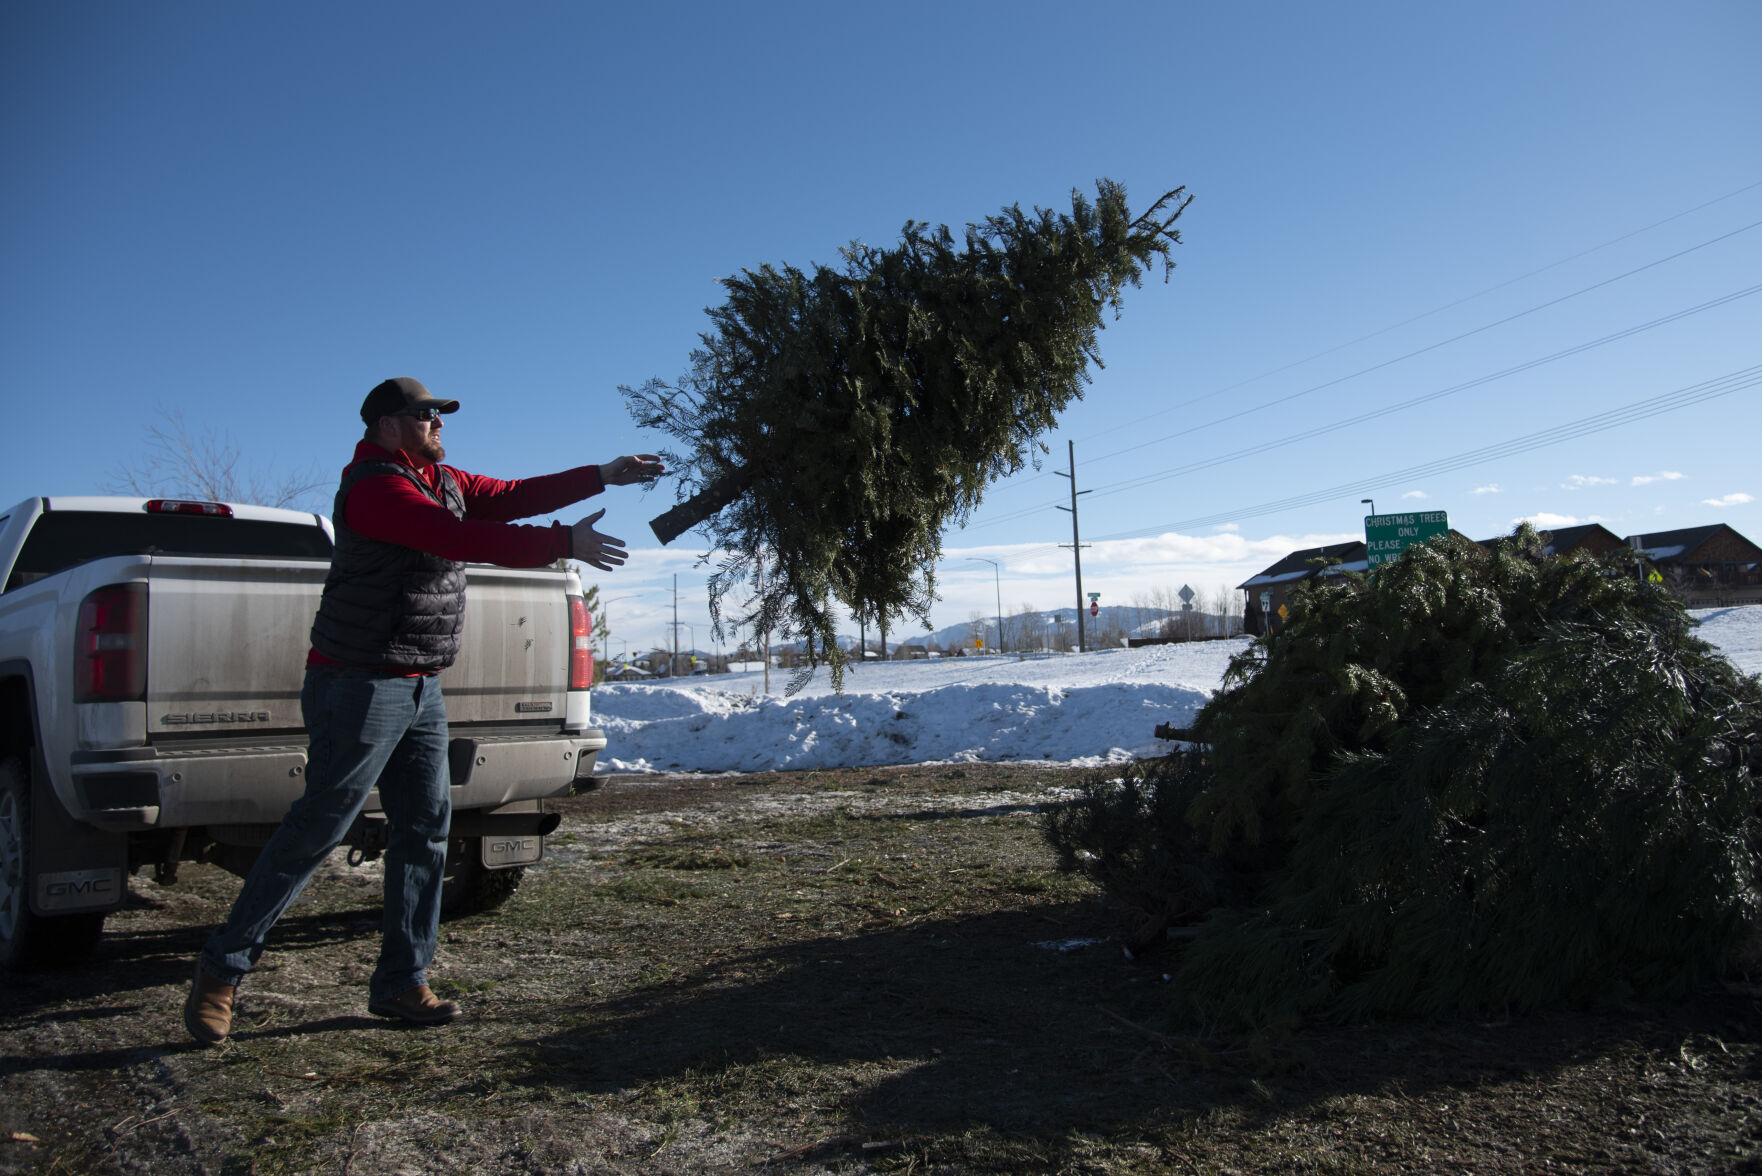 Christmas tree drop-off sites are open around Bozeman